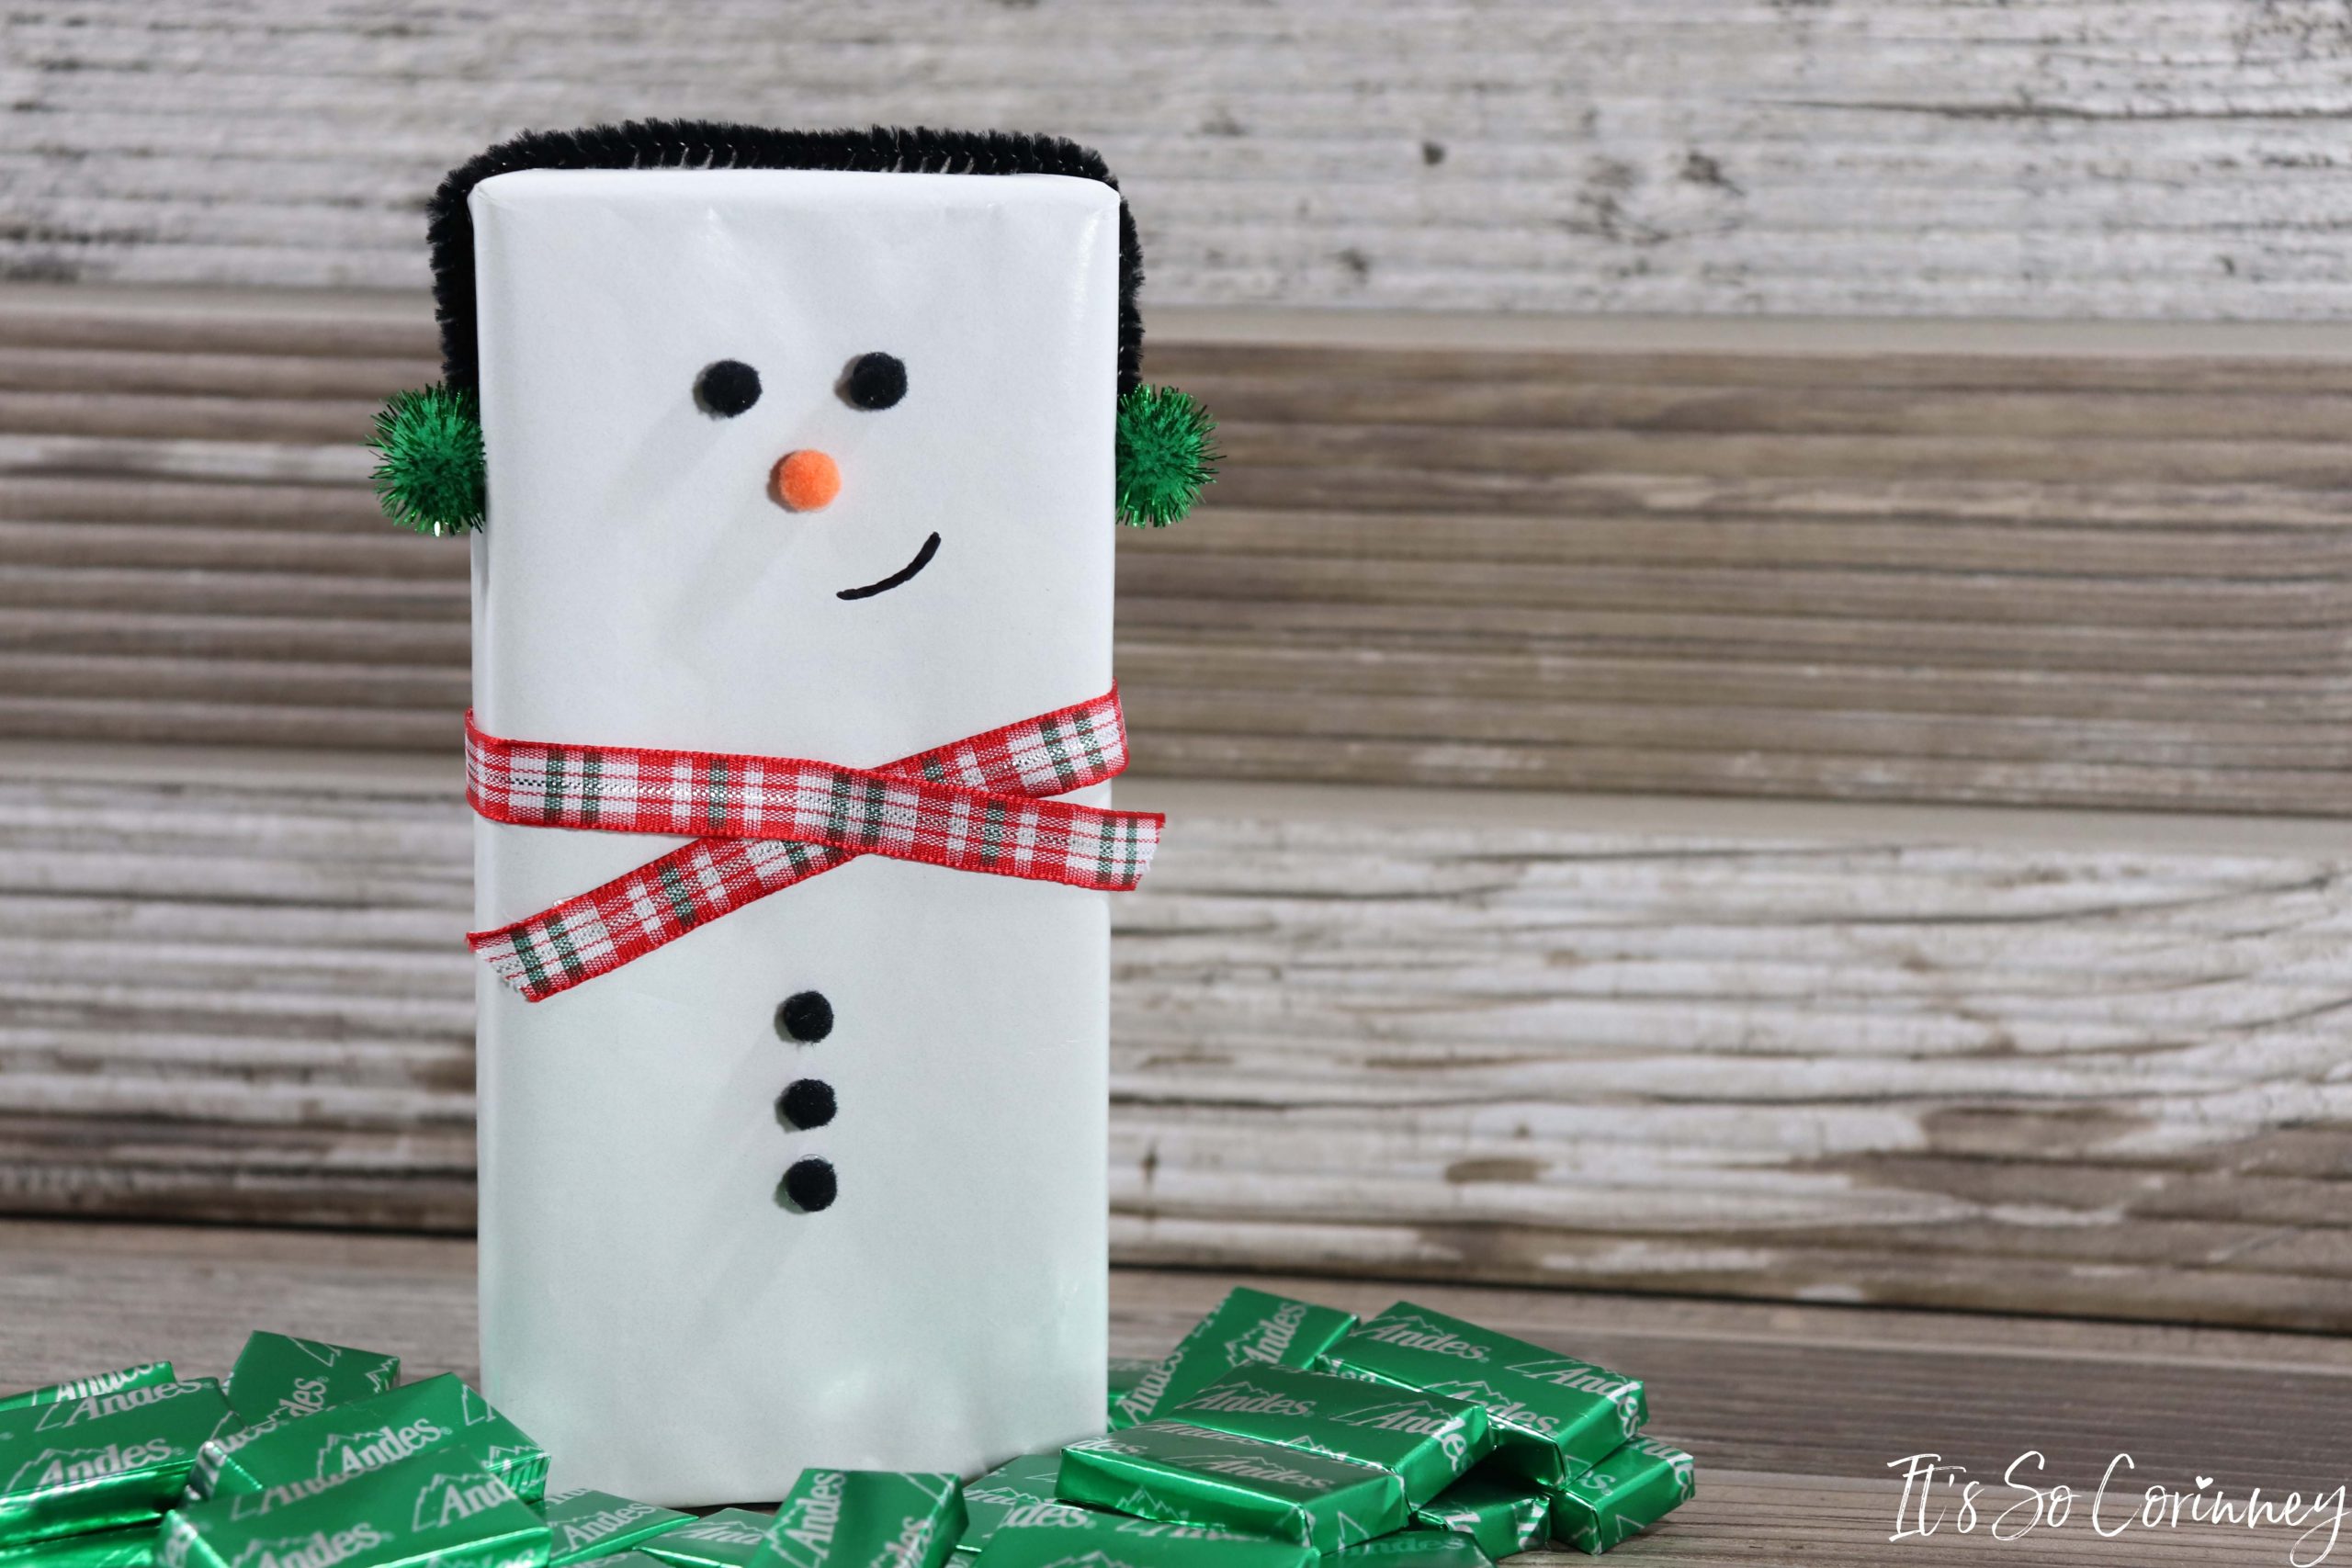 Chocolate Snowman Craft For Kids (Card + Gift!) - Gluesticks Blog